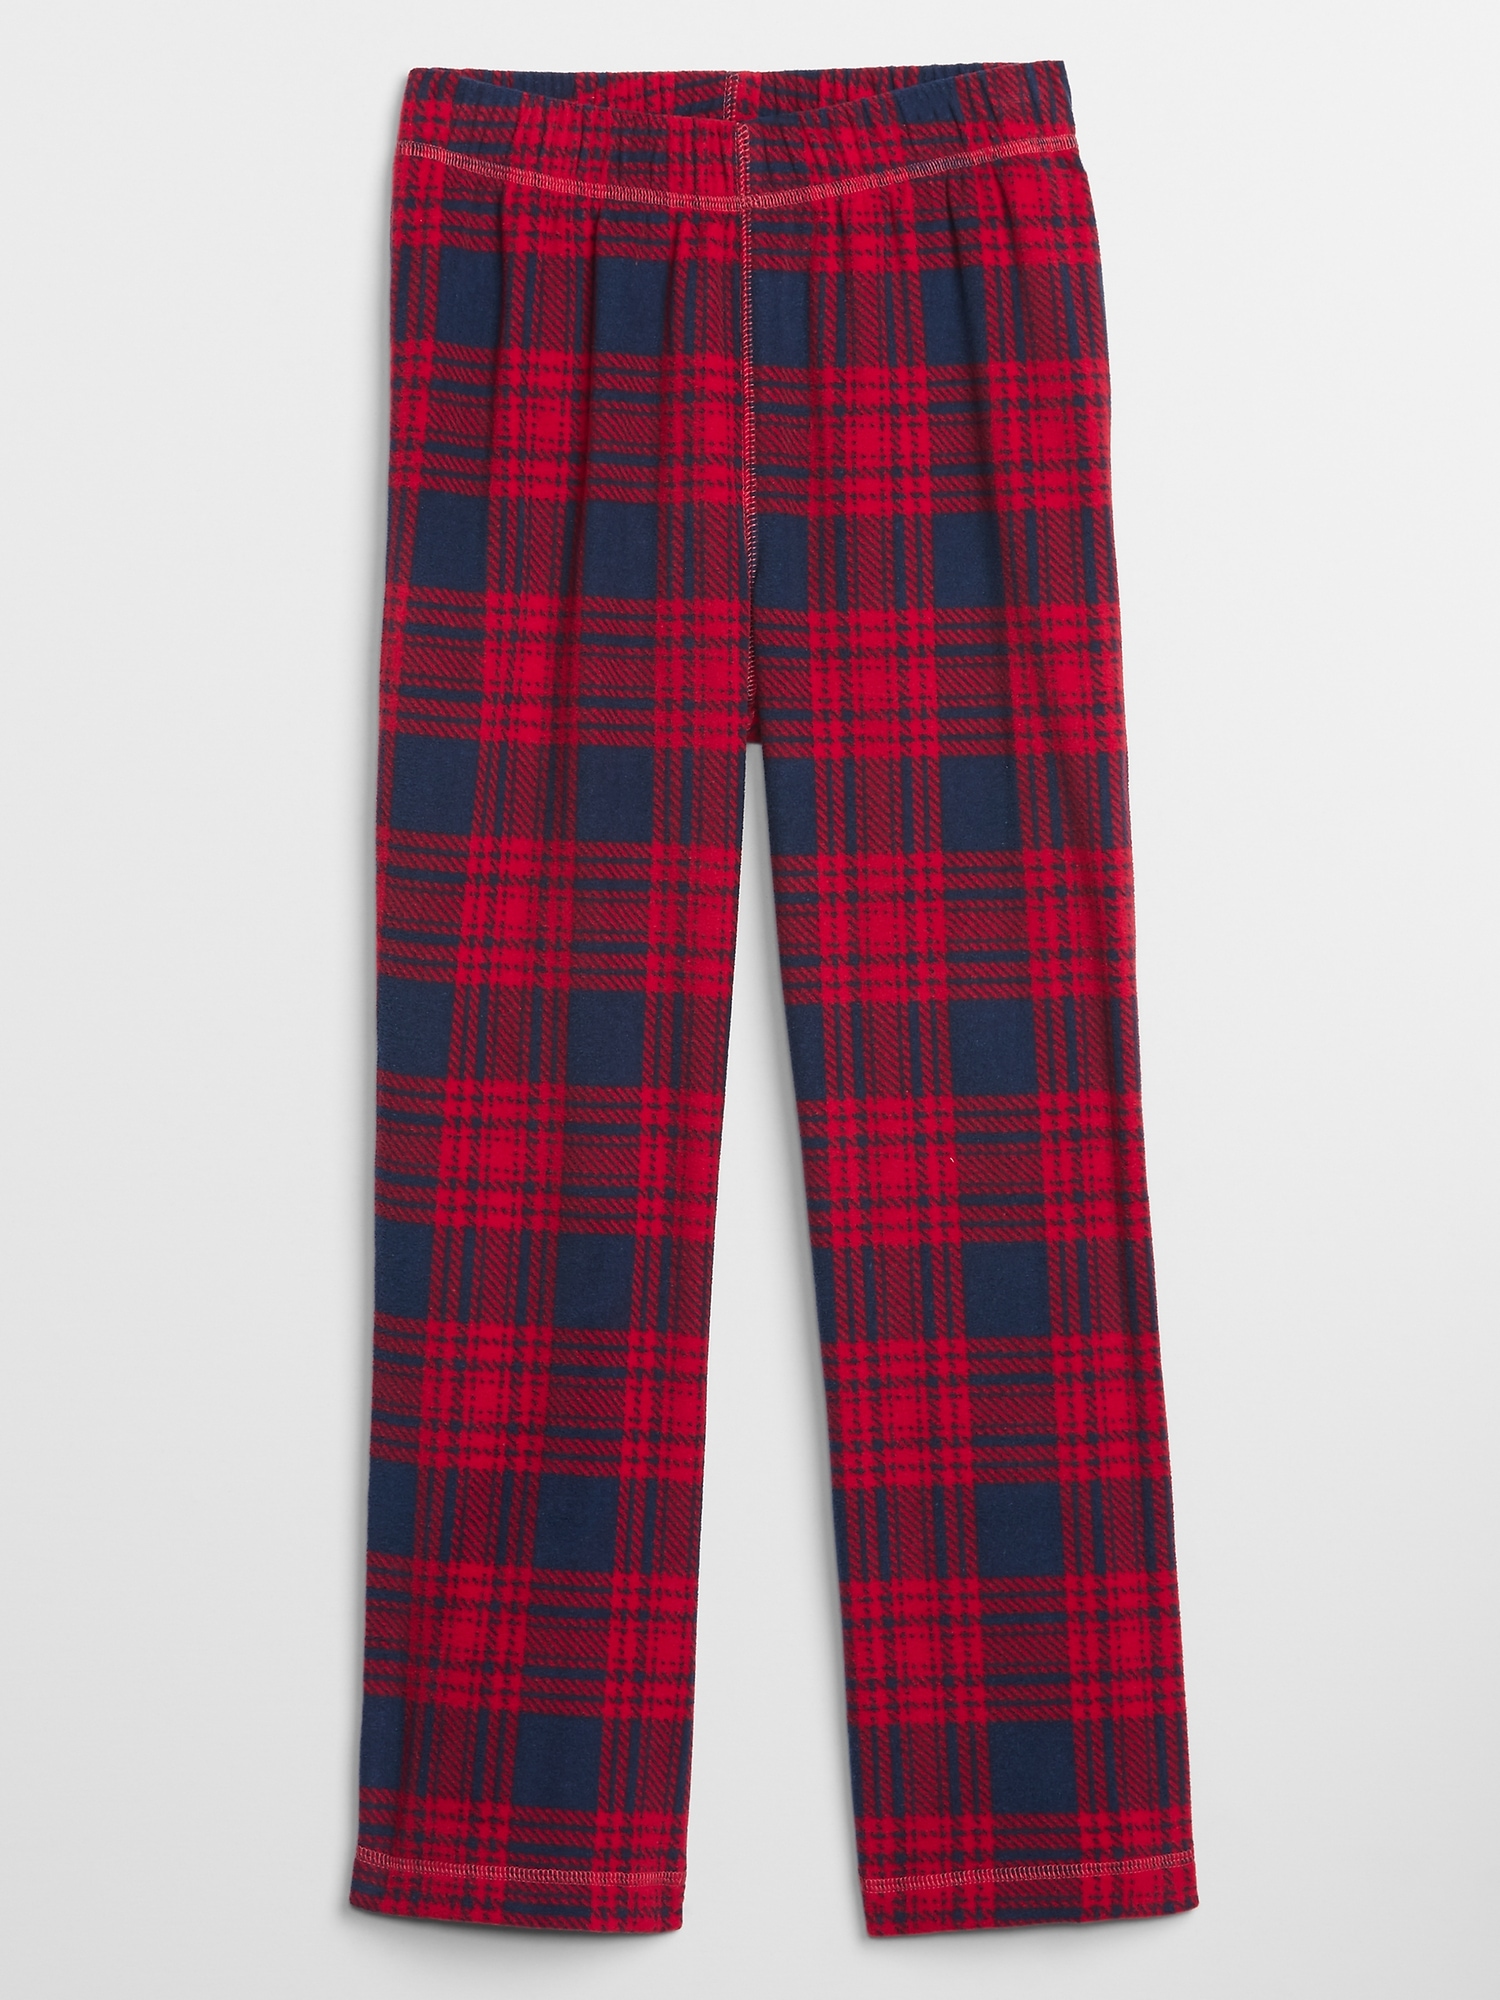 gap red plaid pants